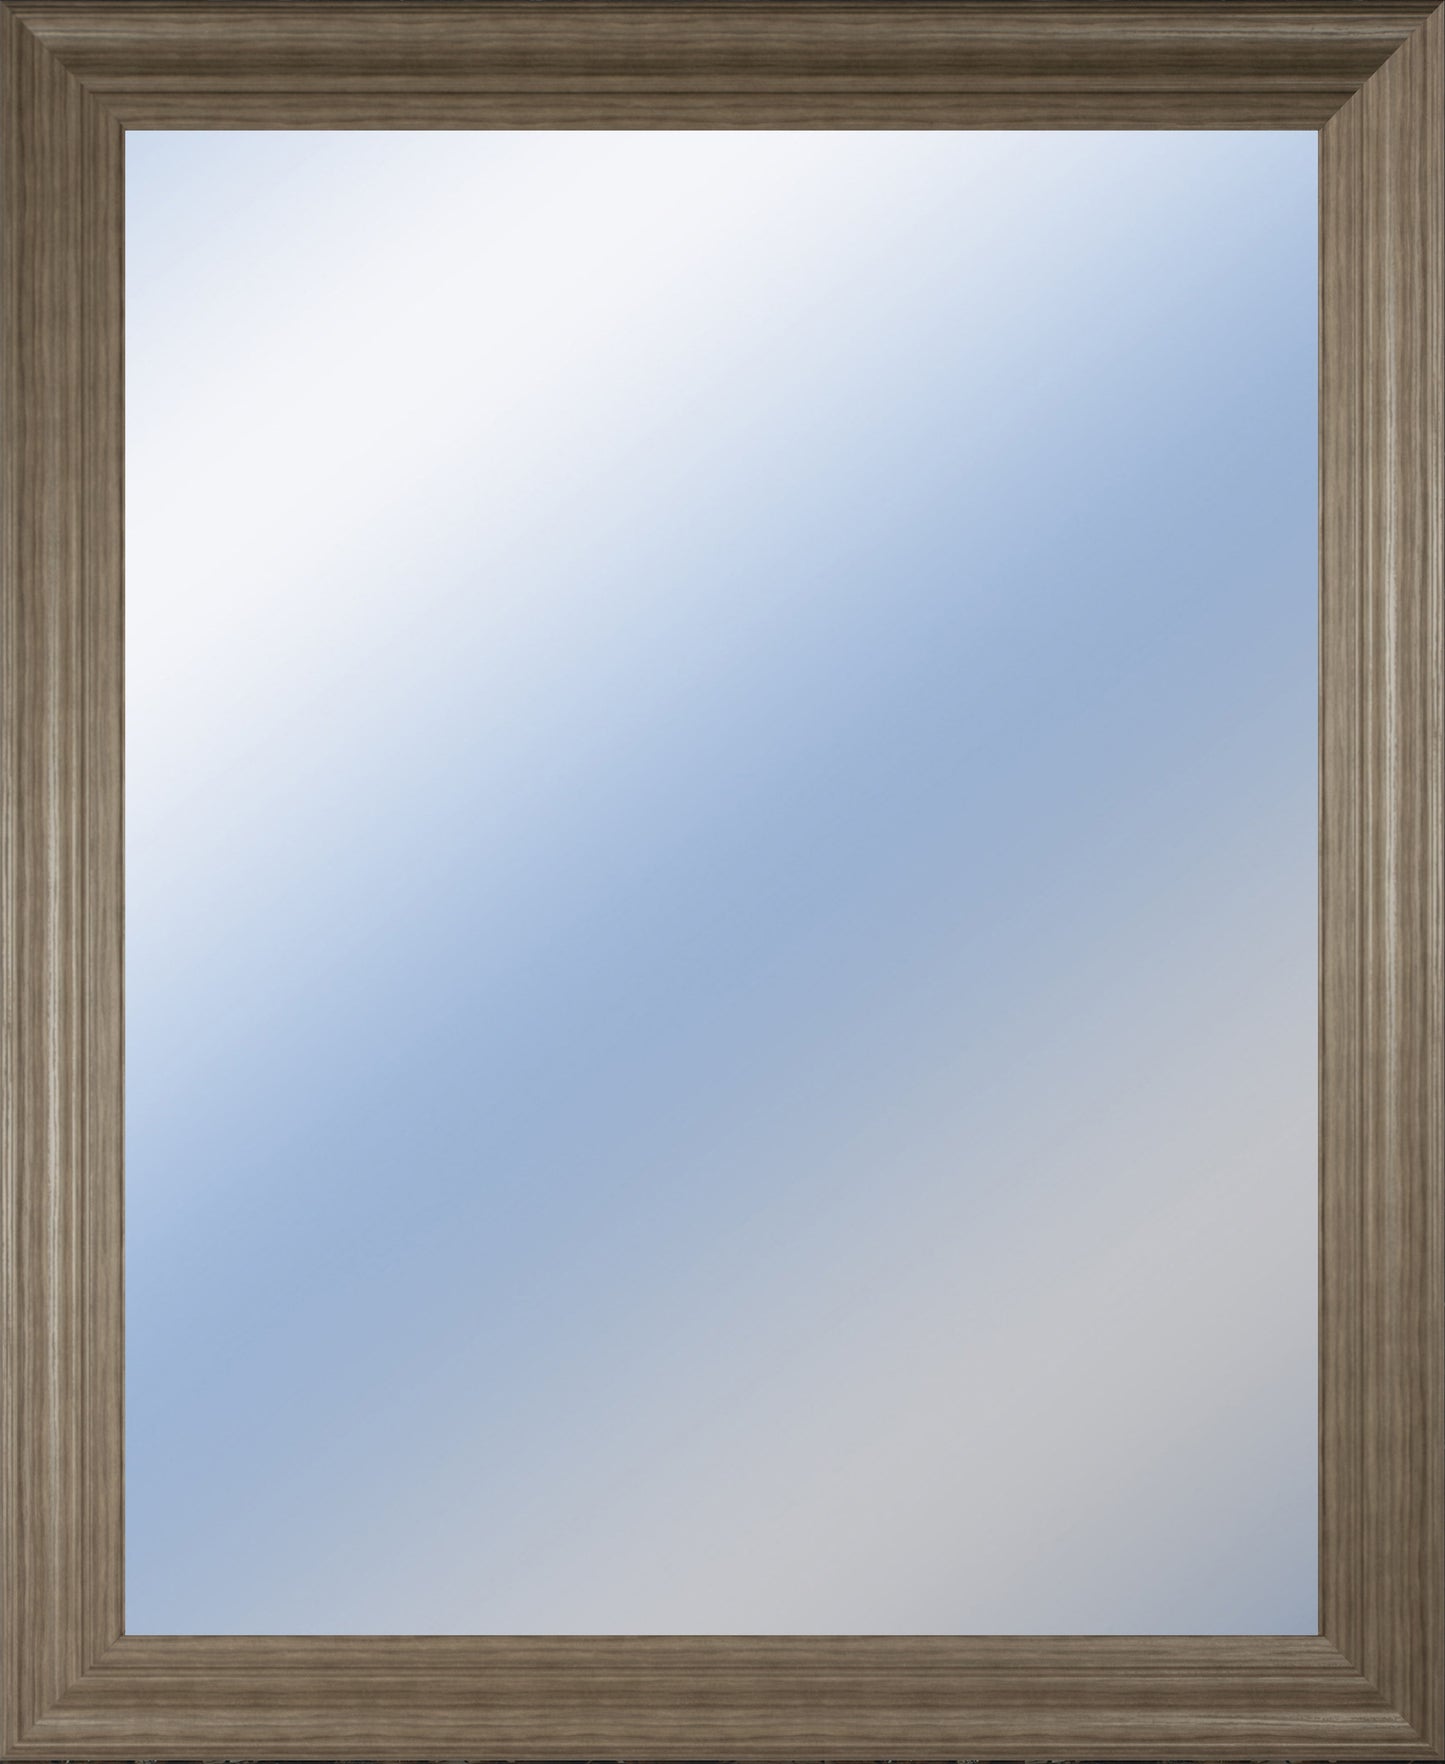 34x40 Decorative Framed Wall Mirror By Classy Art Promotional Mirror Frame #44 - Dark Brown